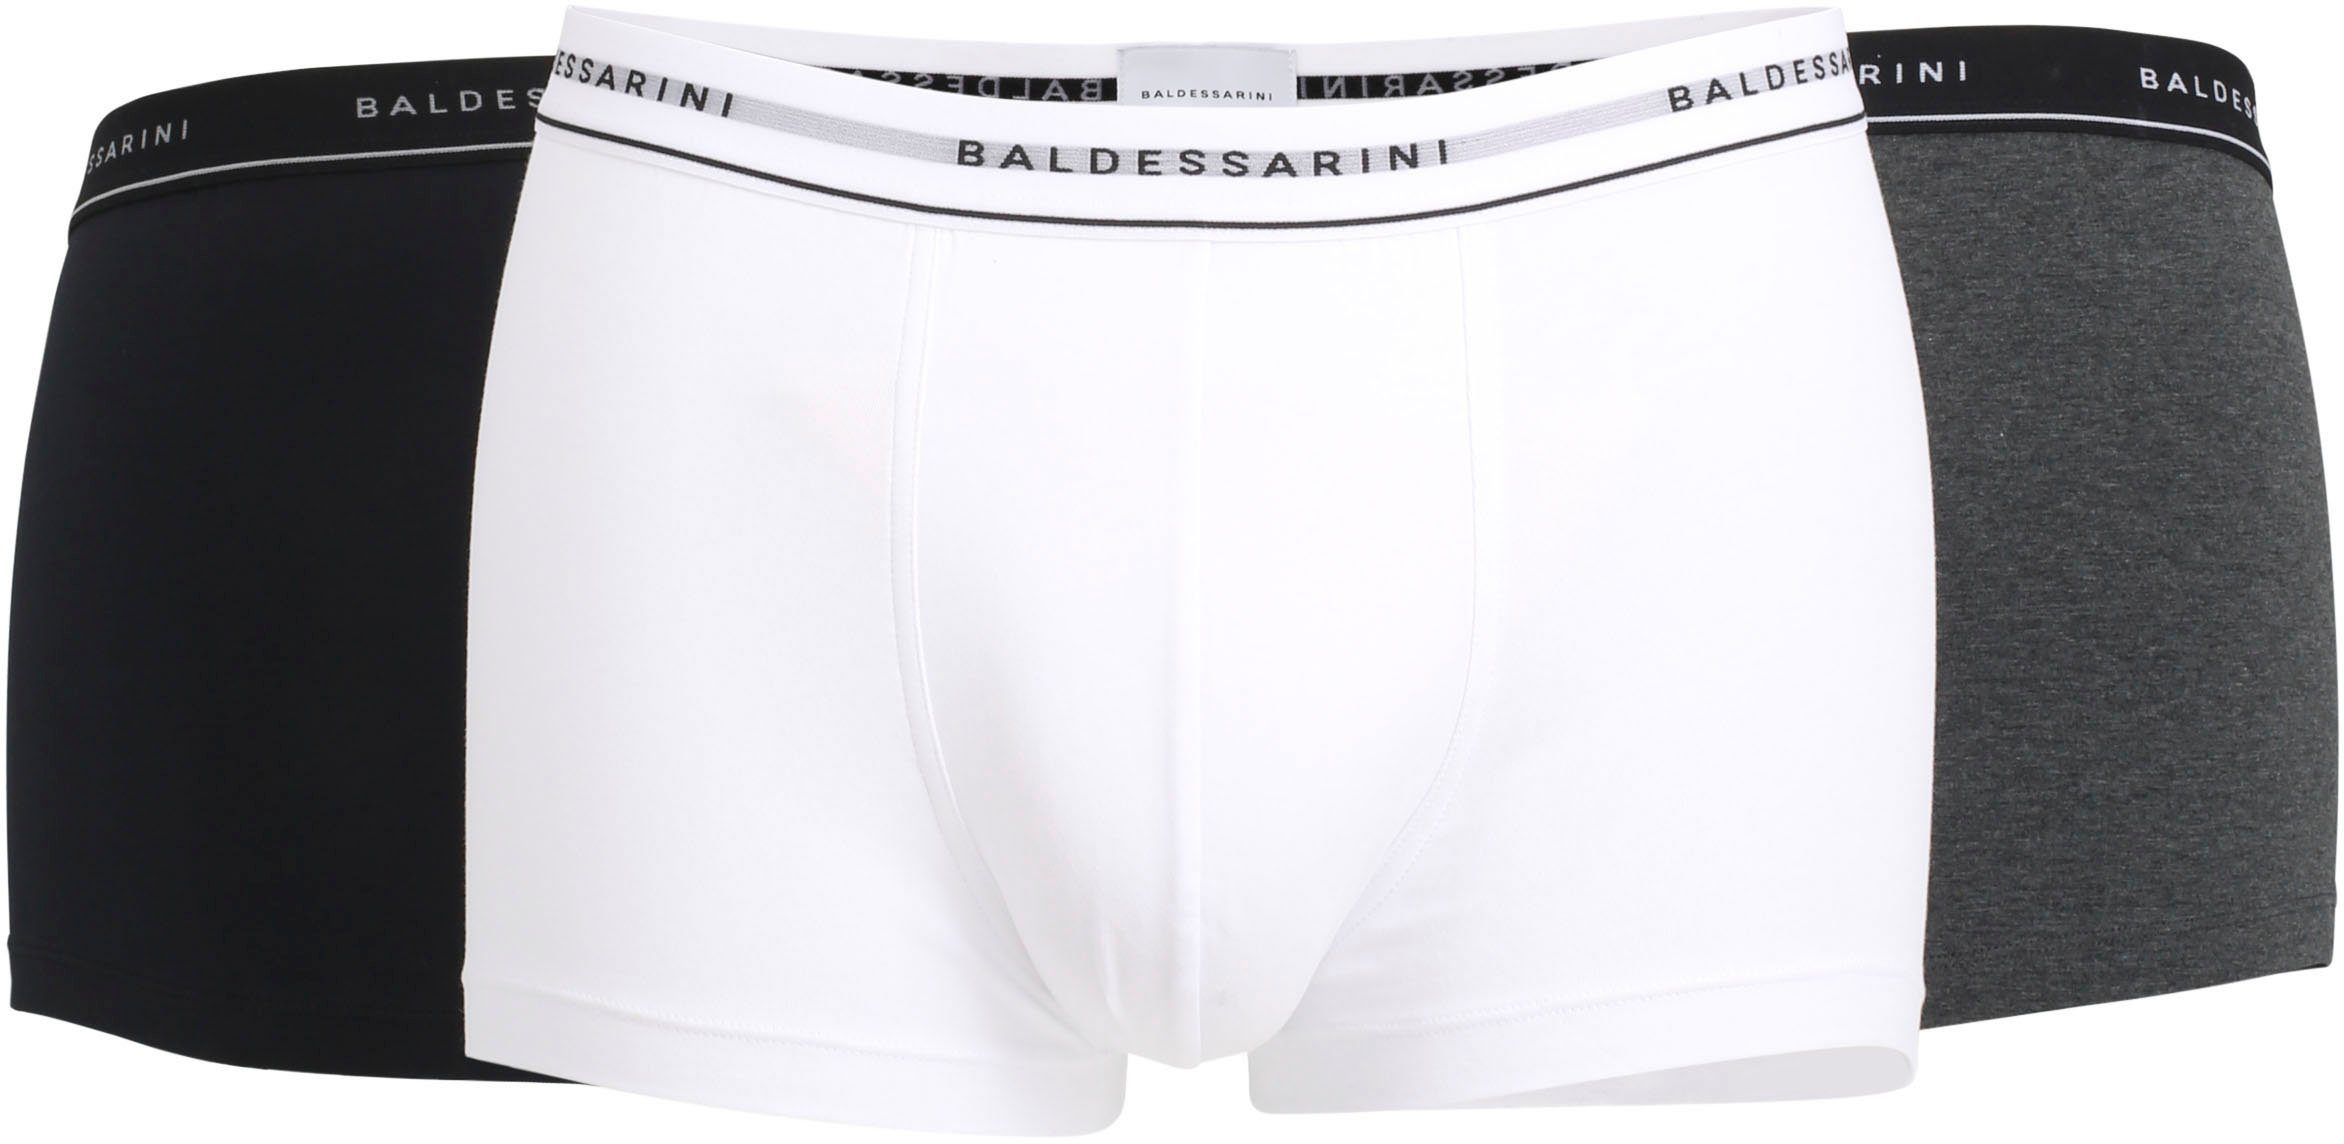 BALDESSARINI Retro 3er Pants grau-dunkel-melange Pac Pants Short